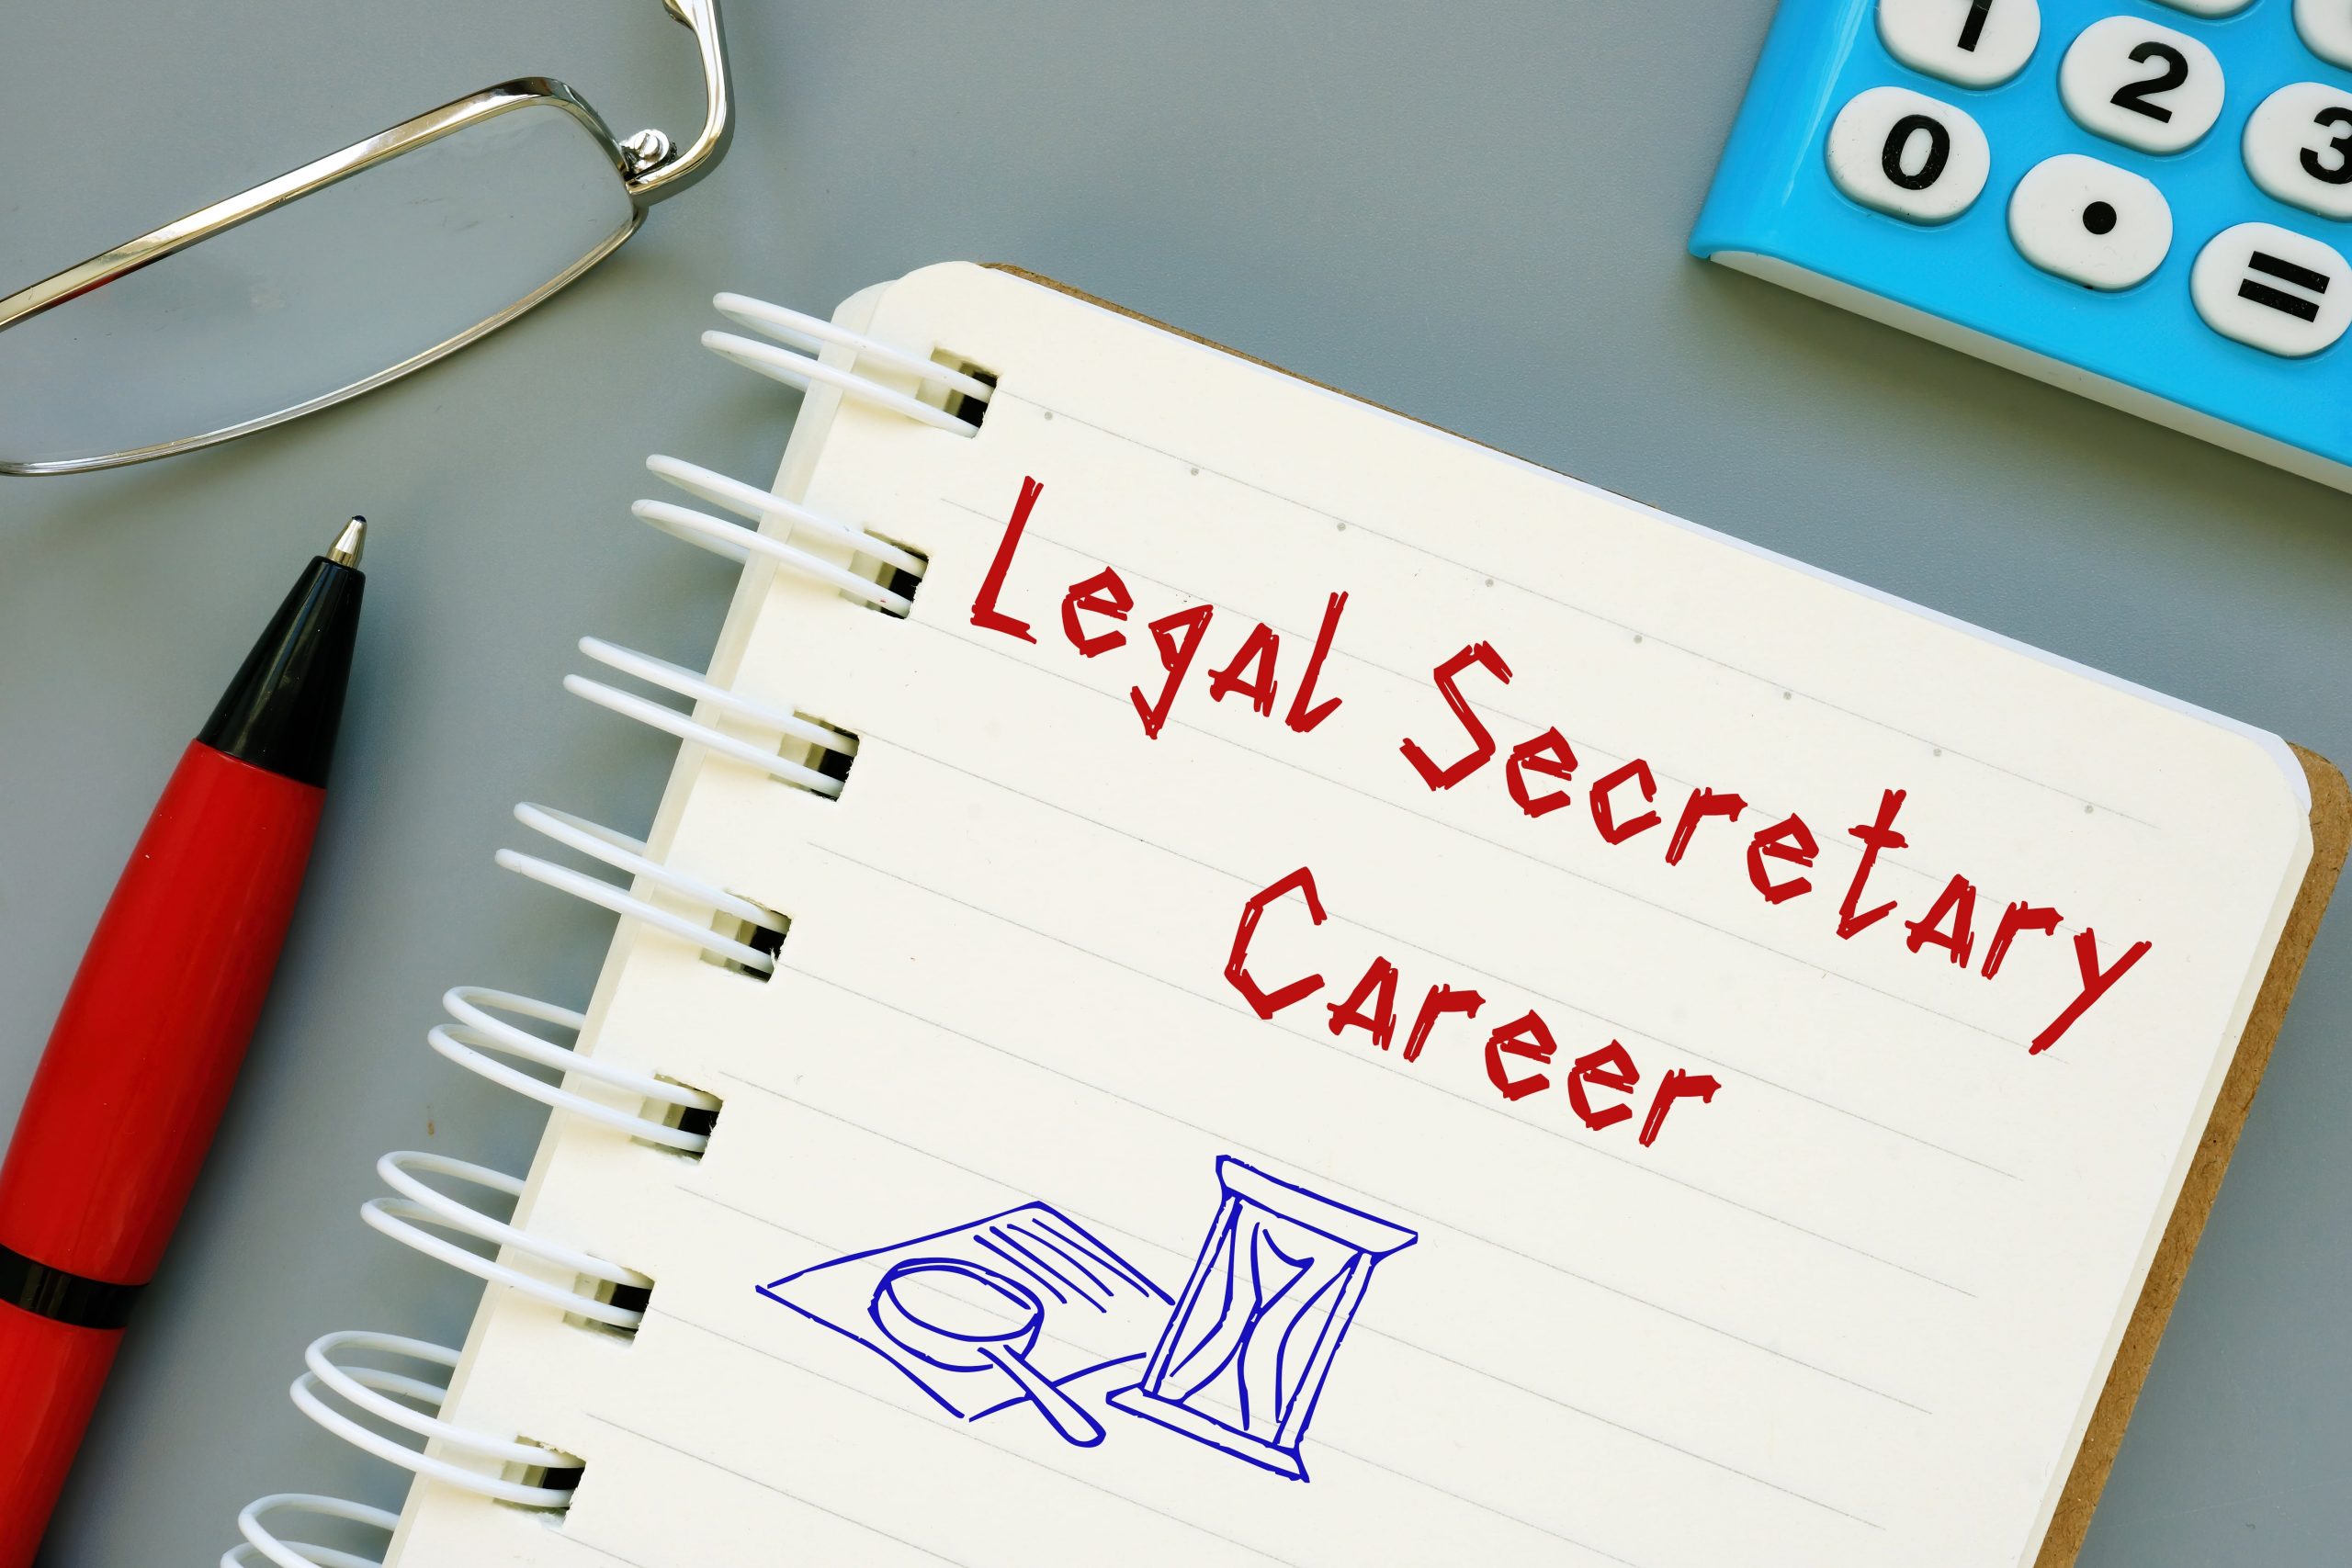 Legal PA Careers